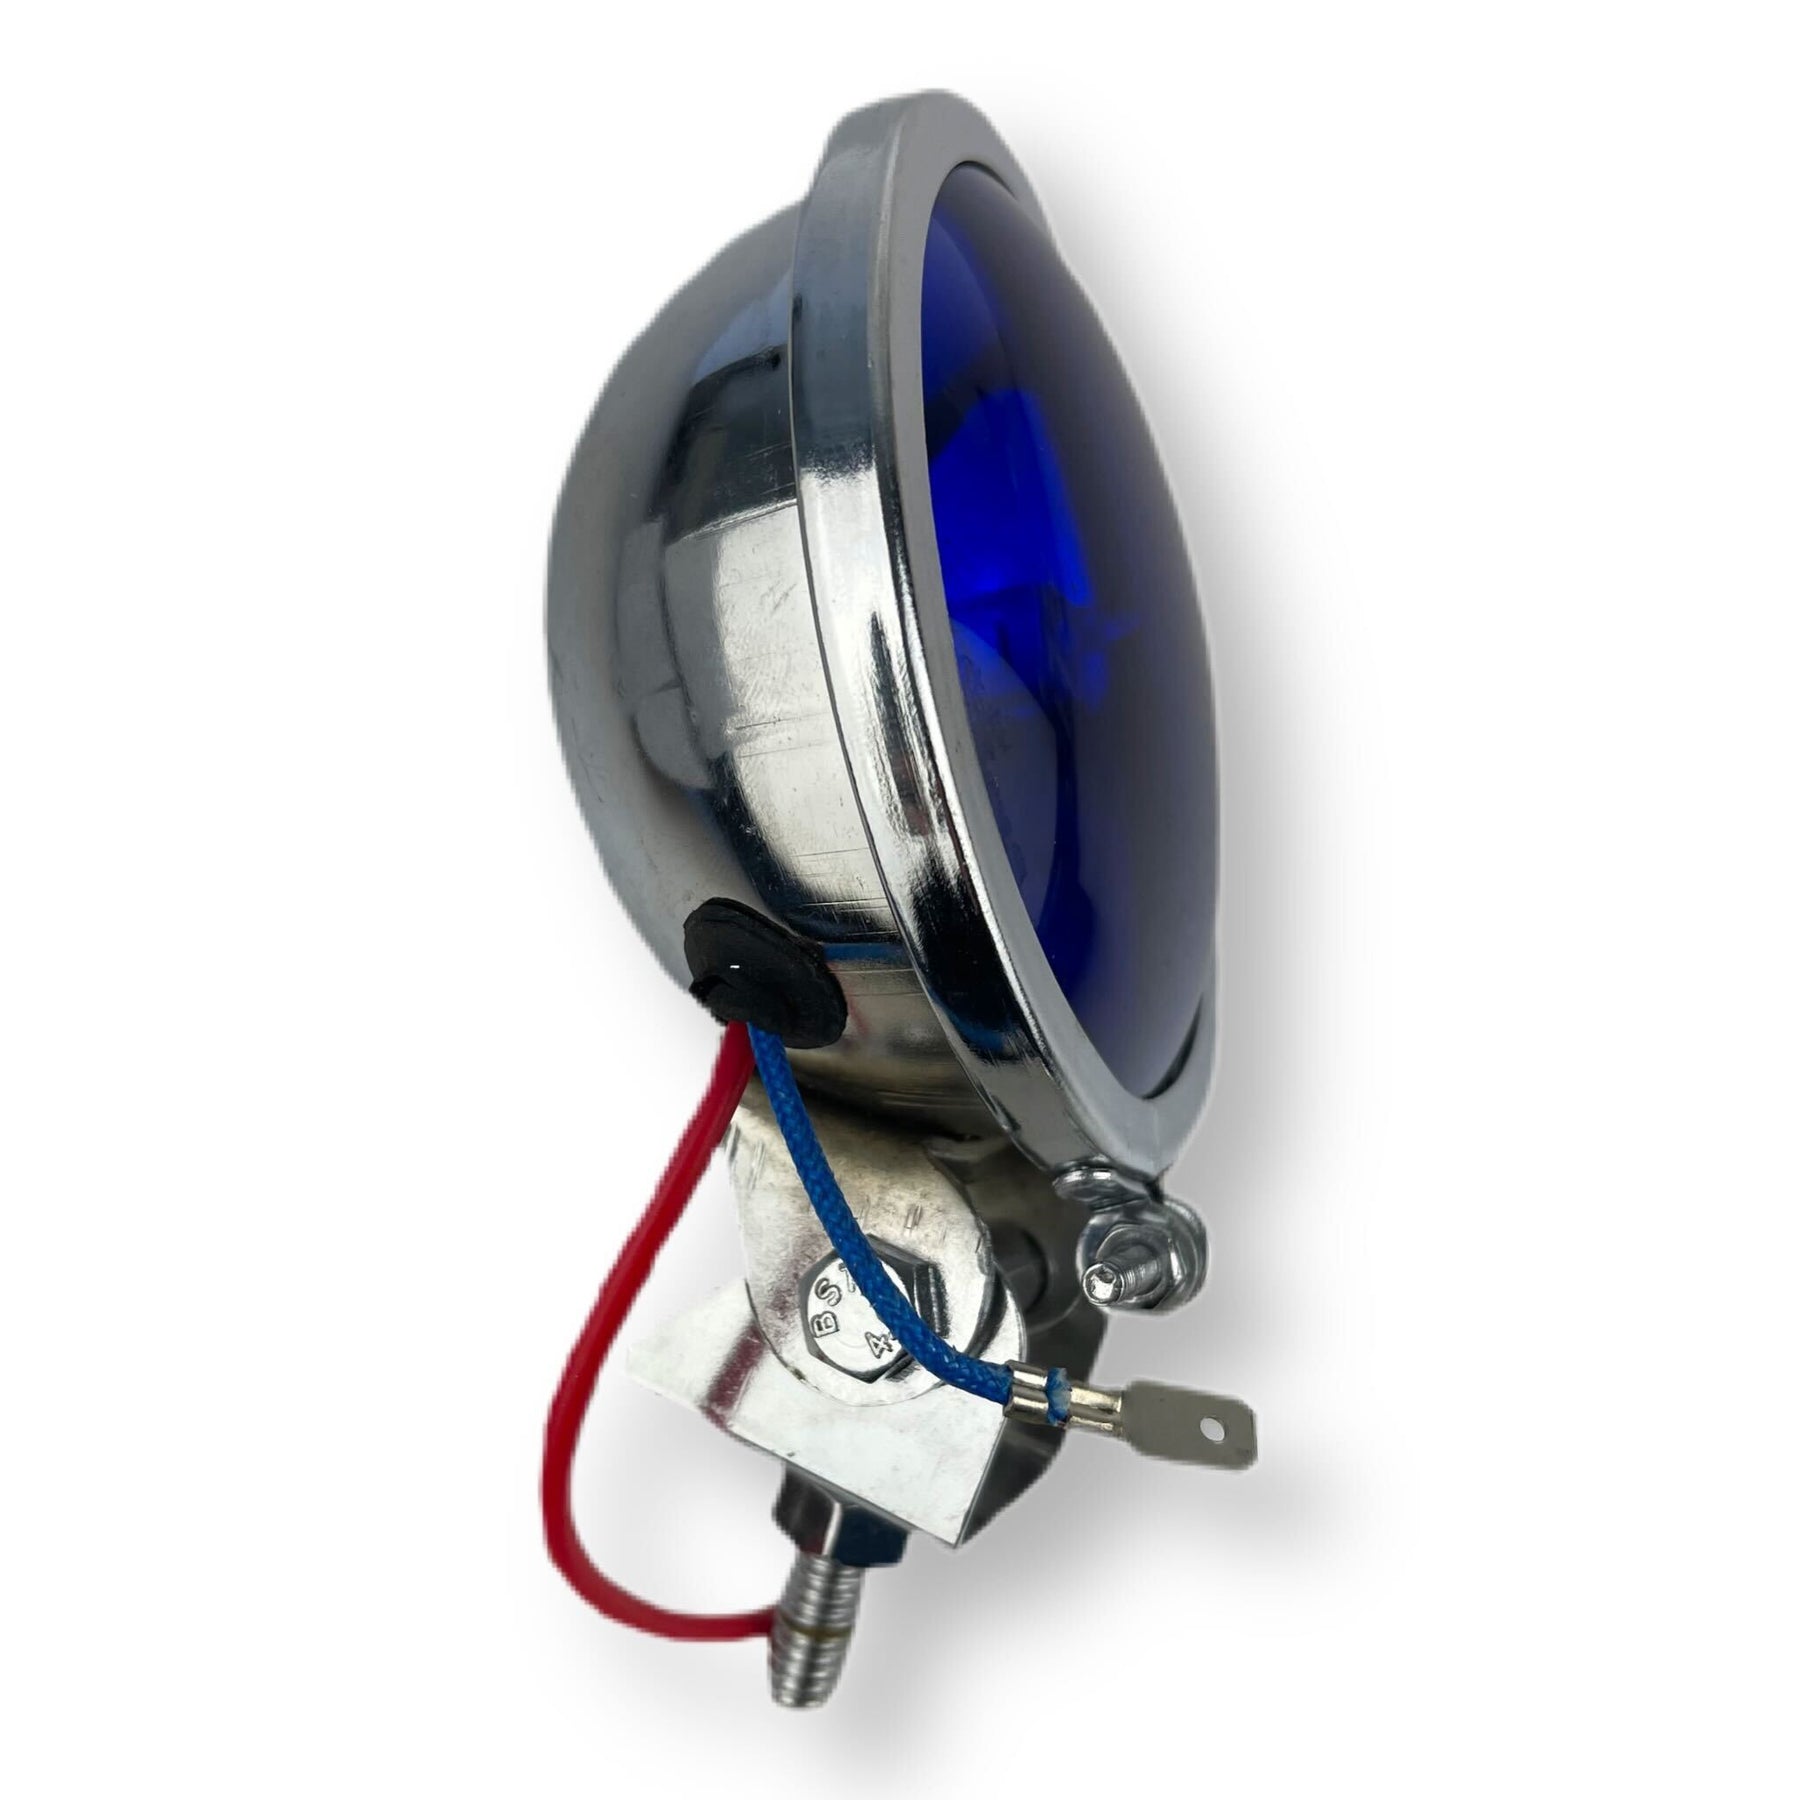 Vespa Lambretta Scooter Lamp Spot Light 9cm Hunter Style Chrome - Blue Lens